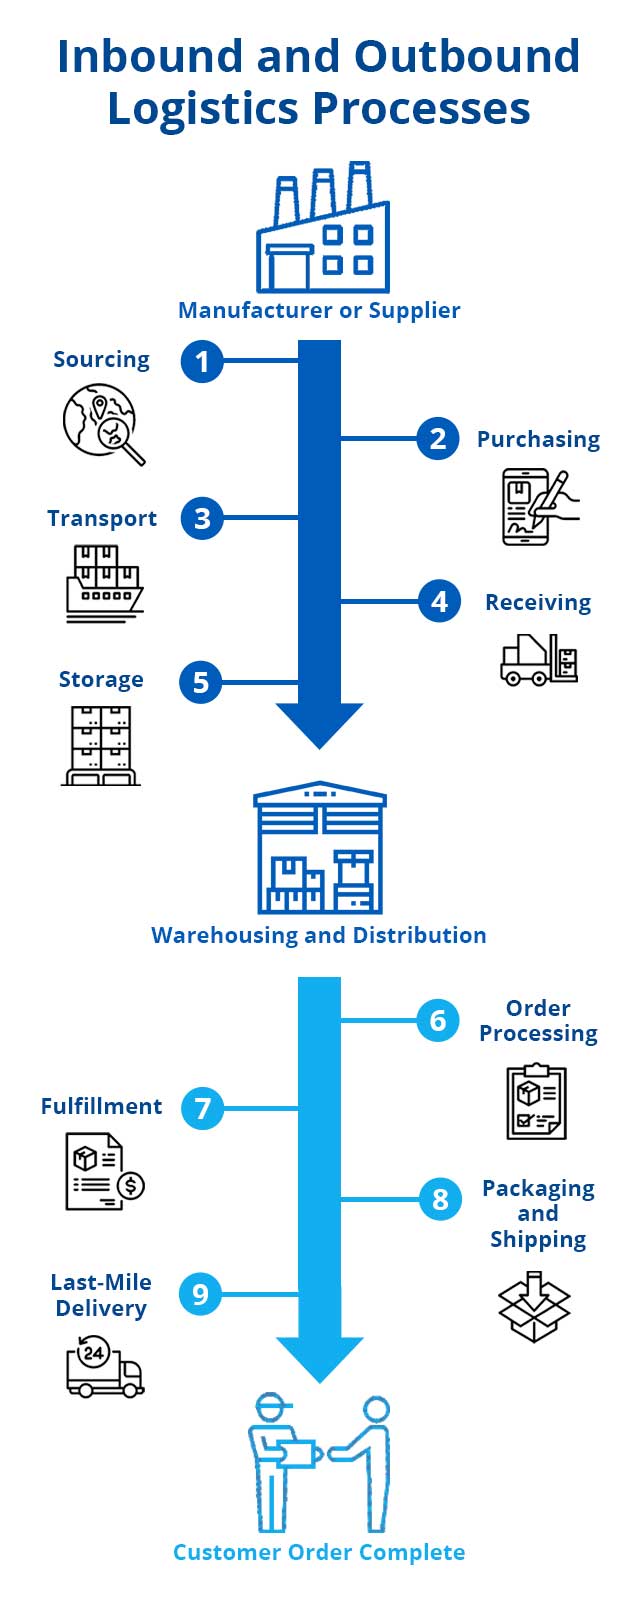 Inbound and Outbound Logistics Processes